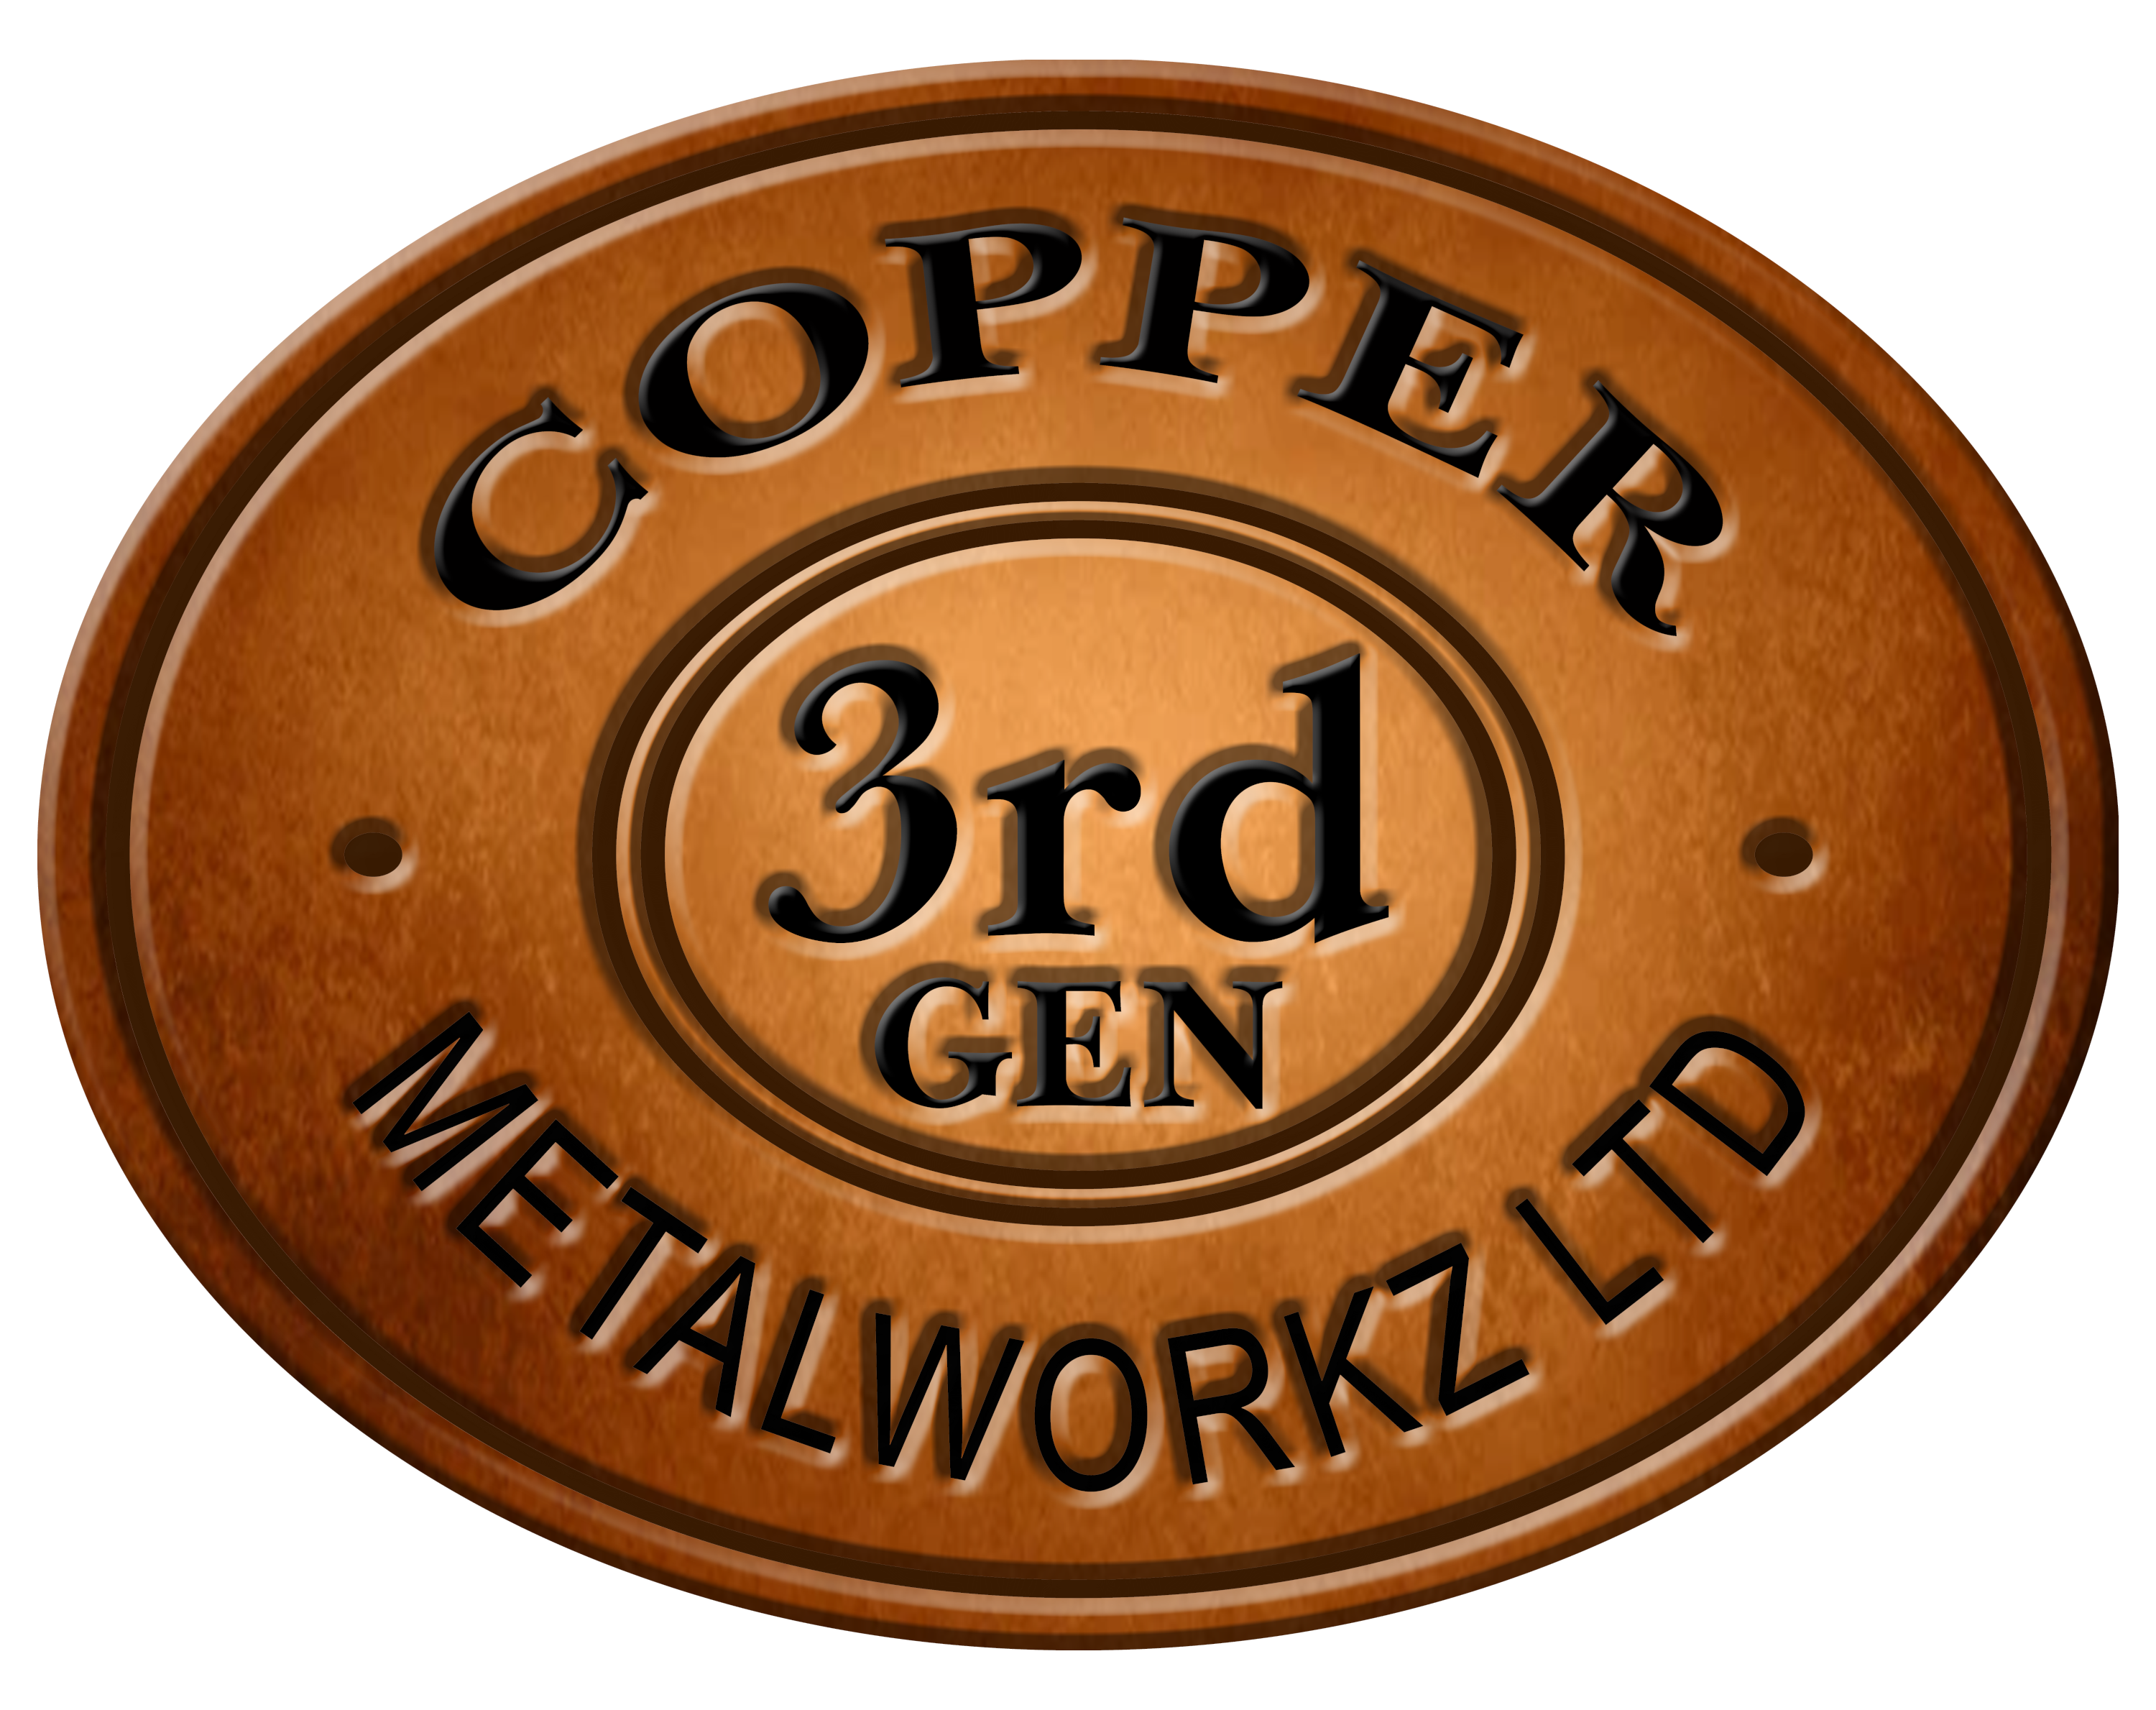 3rd Gen Copper & Metalworkz